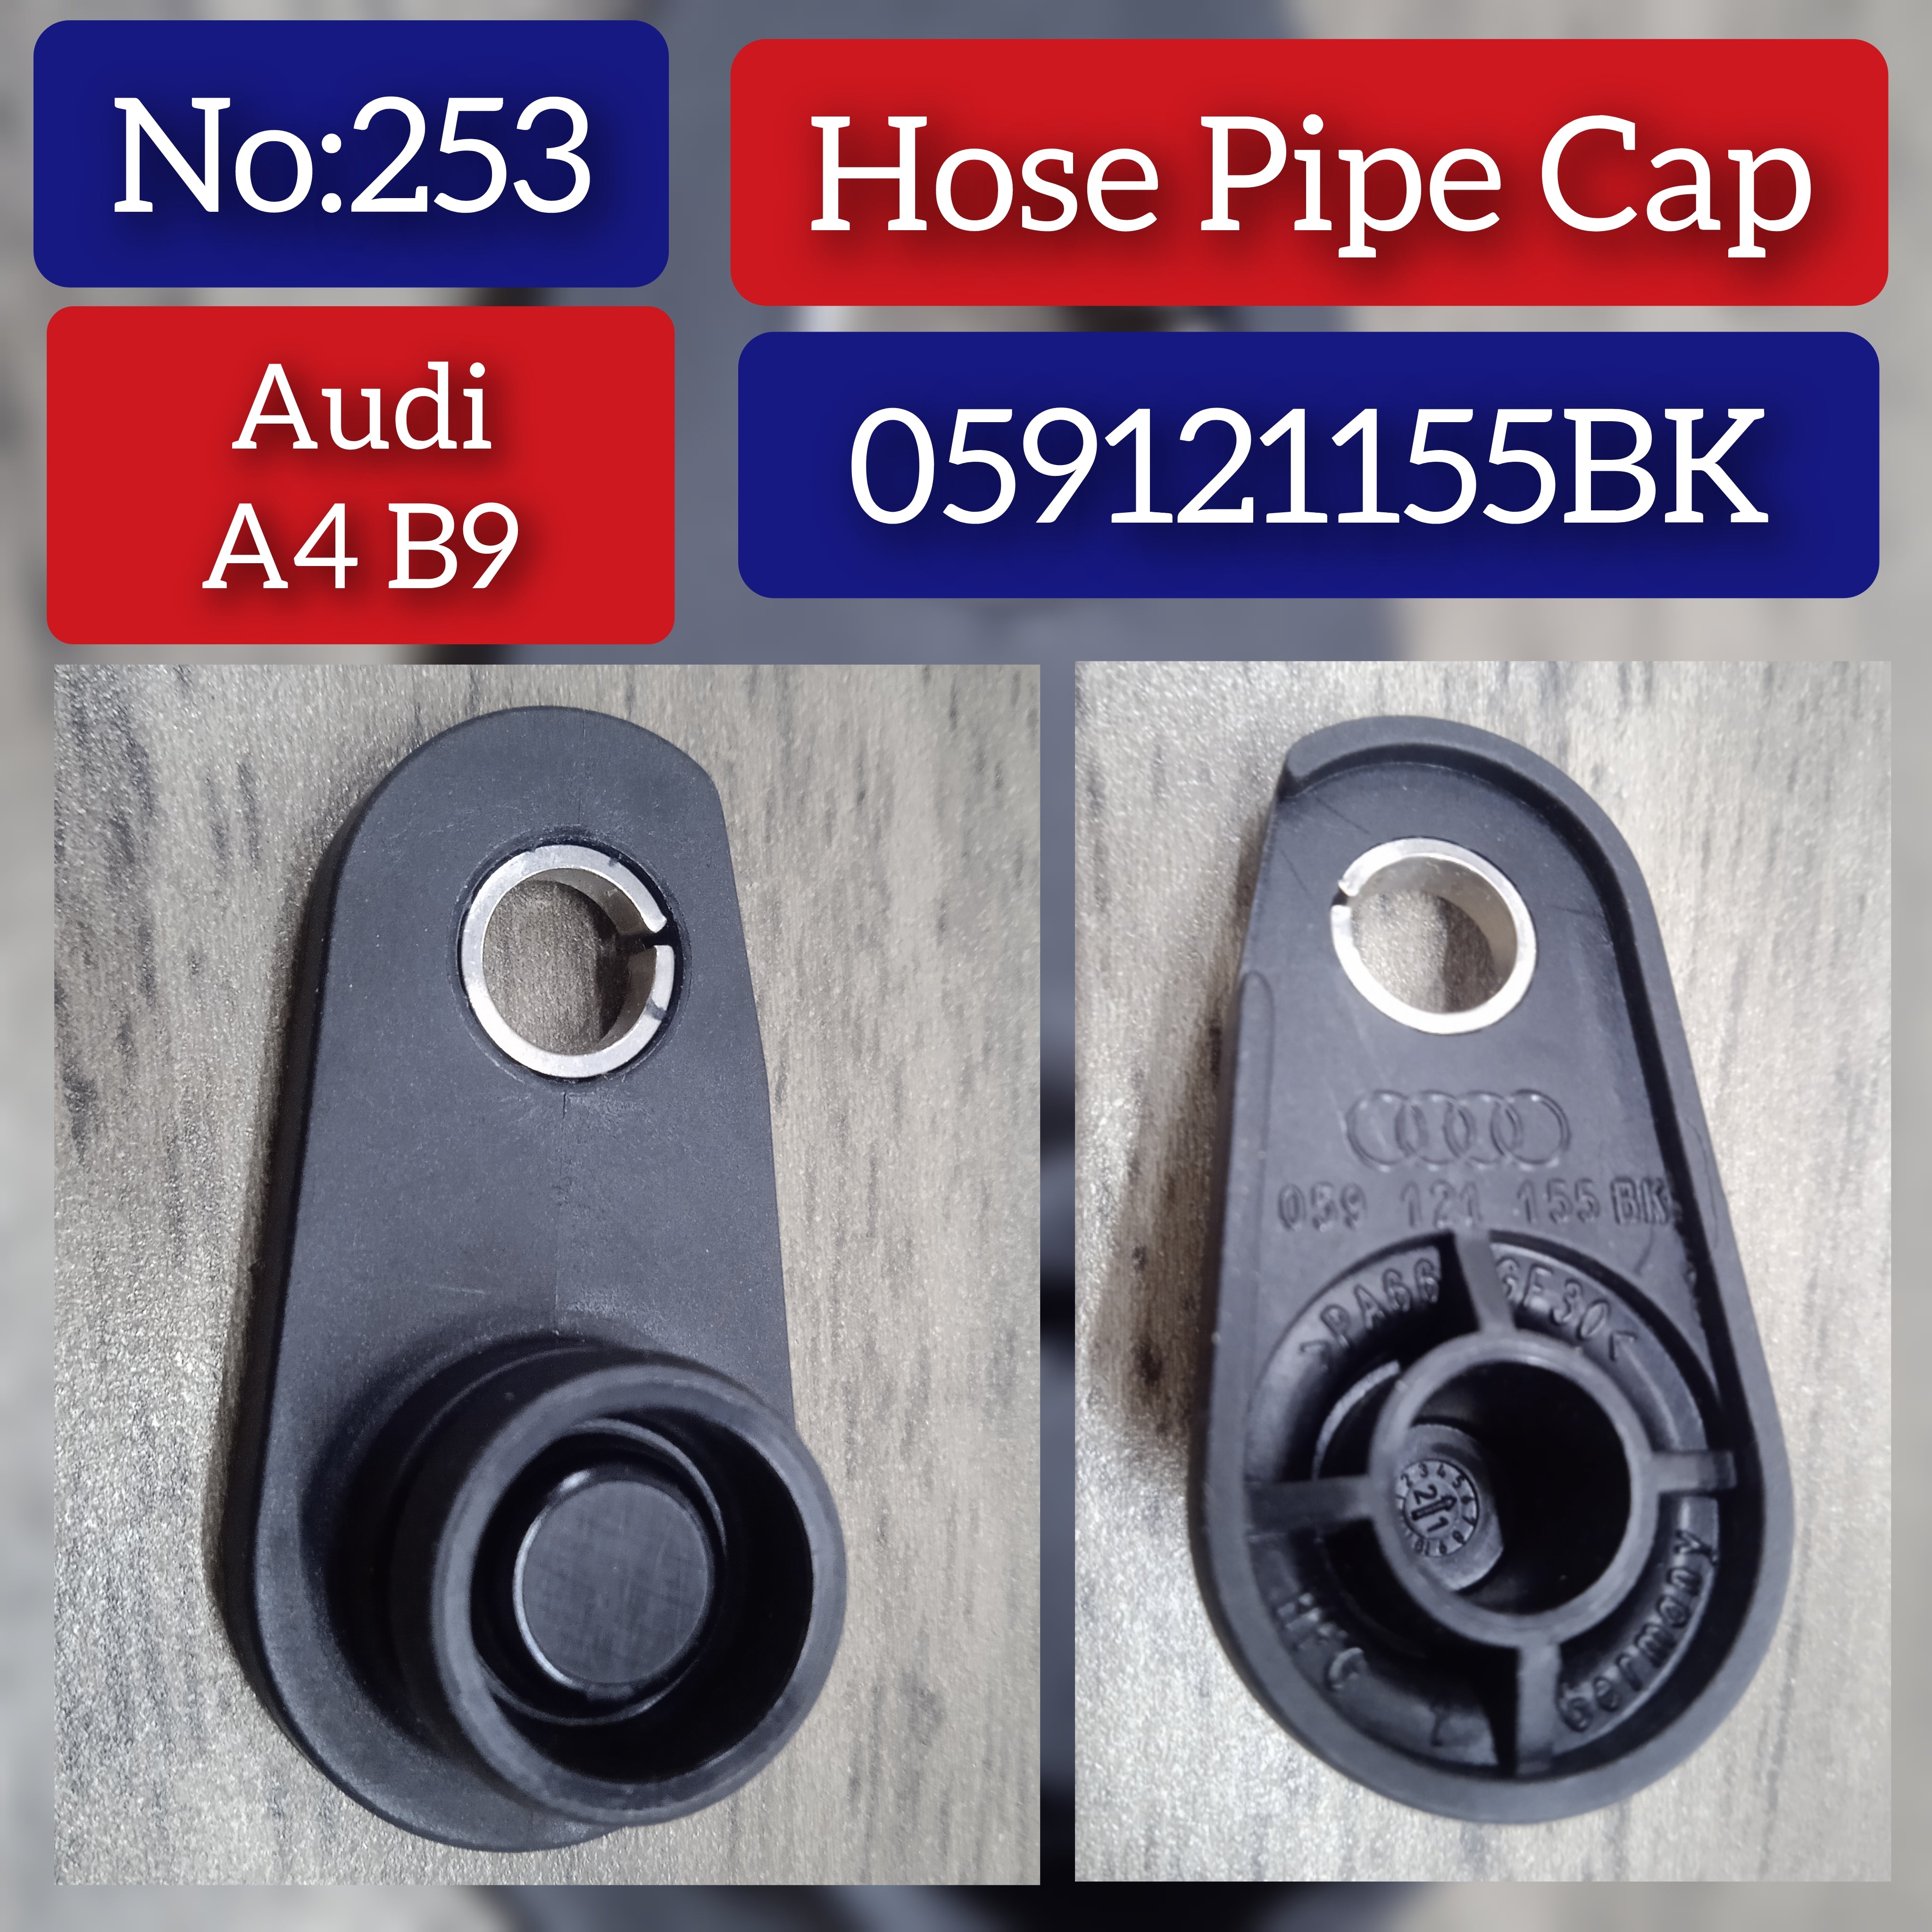 Hose Pipe Cap 059121155BK For AUDI A4 Tag-H-253